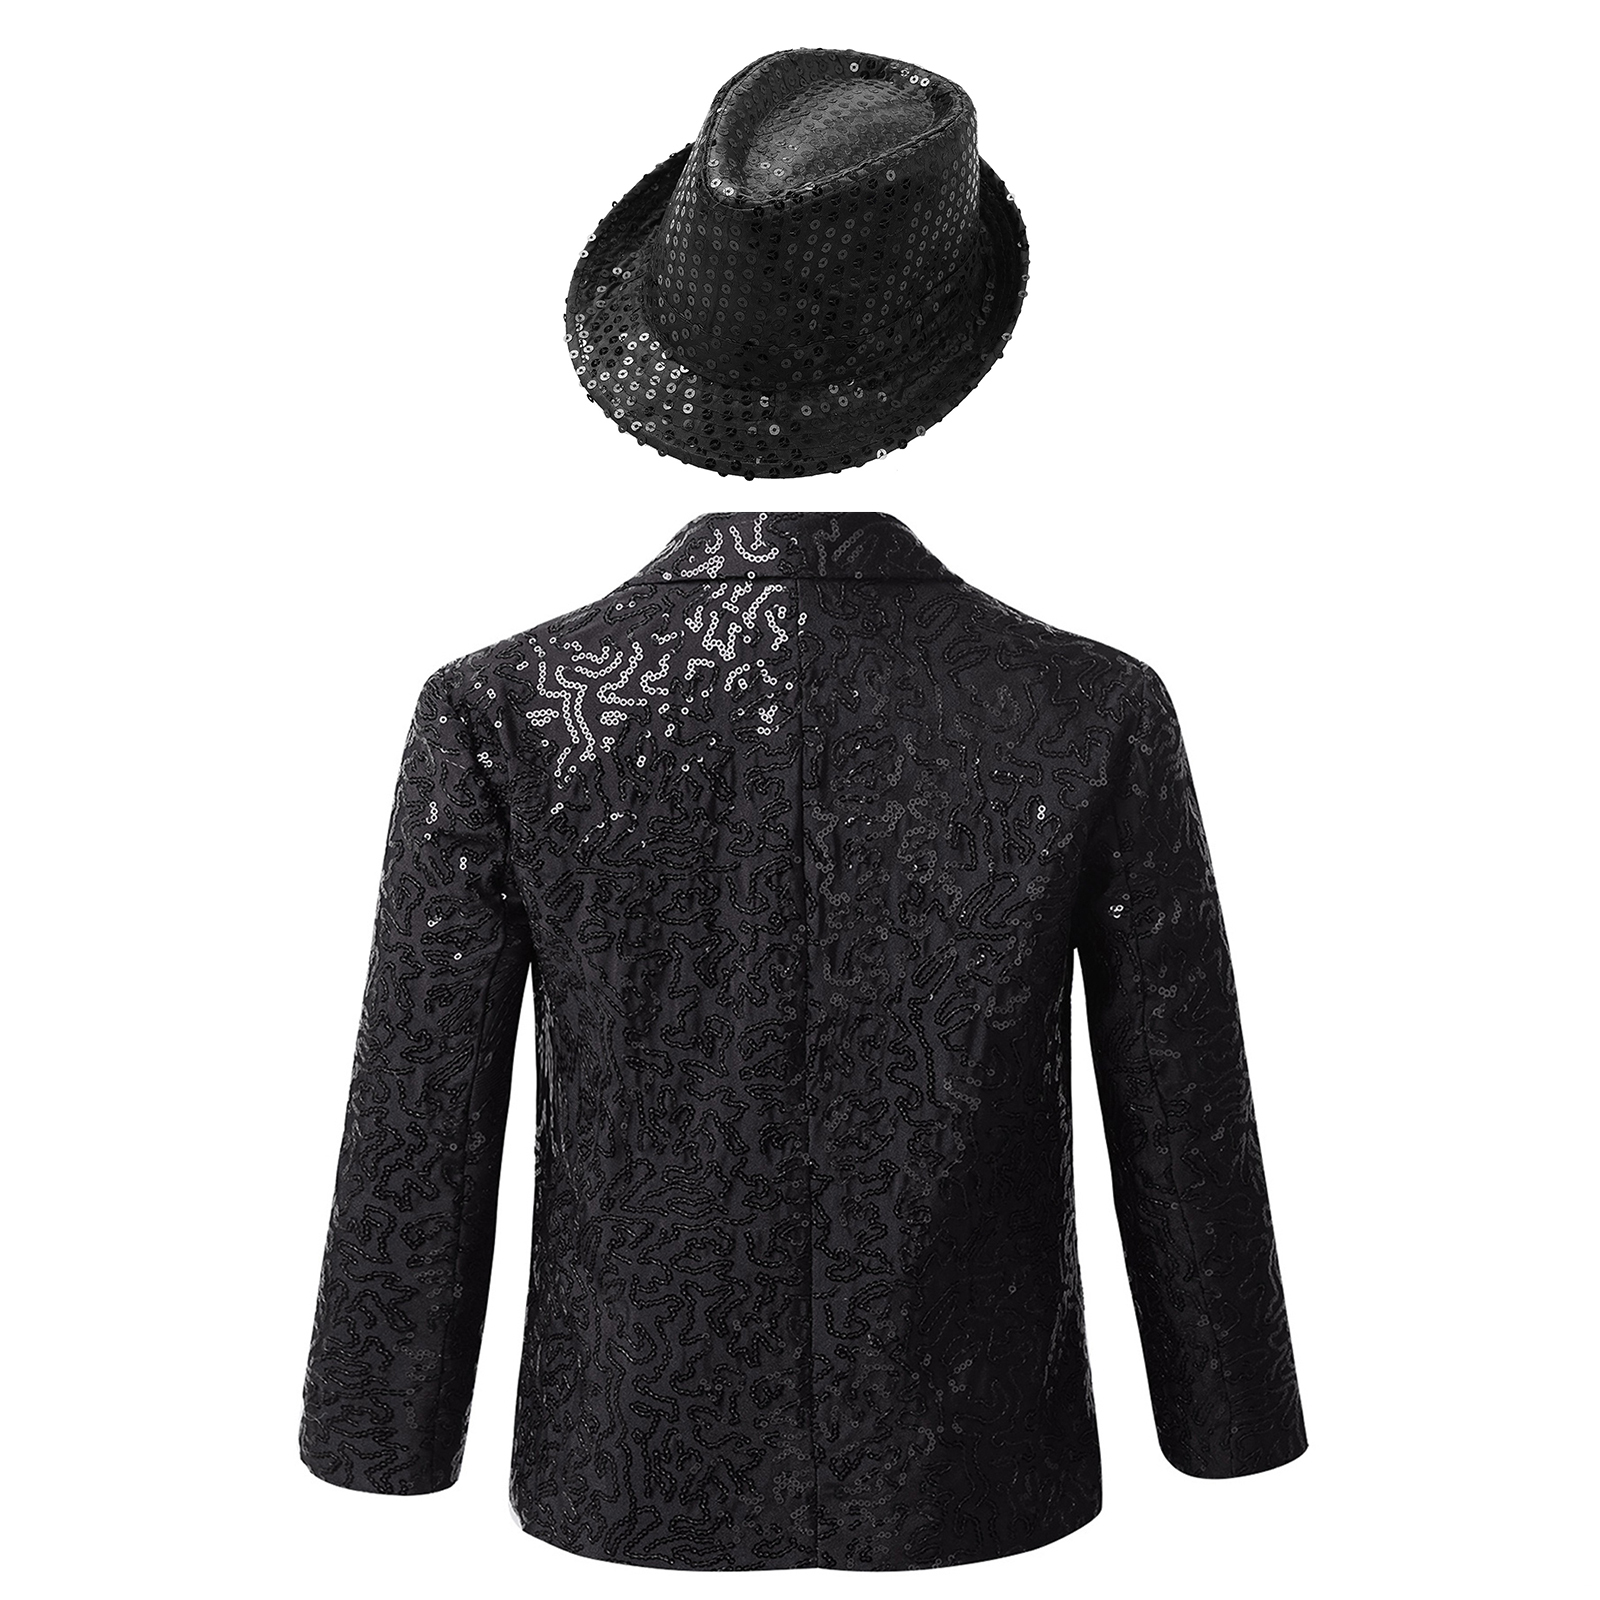 MSemis Kids Boys Shiny Sequin Suit Jacket Party Blazer Dance Tuxedo Costume with Hat,Size 6-16 Black 10 - image 2 of 6